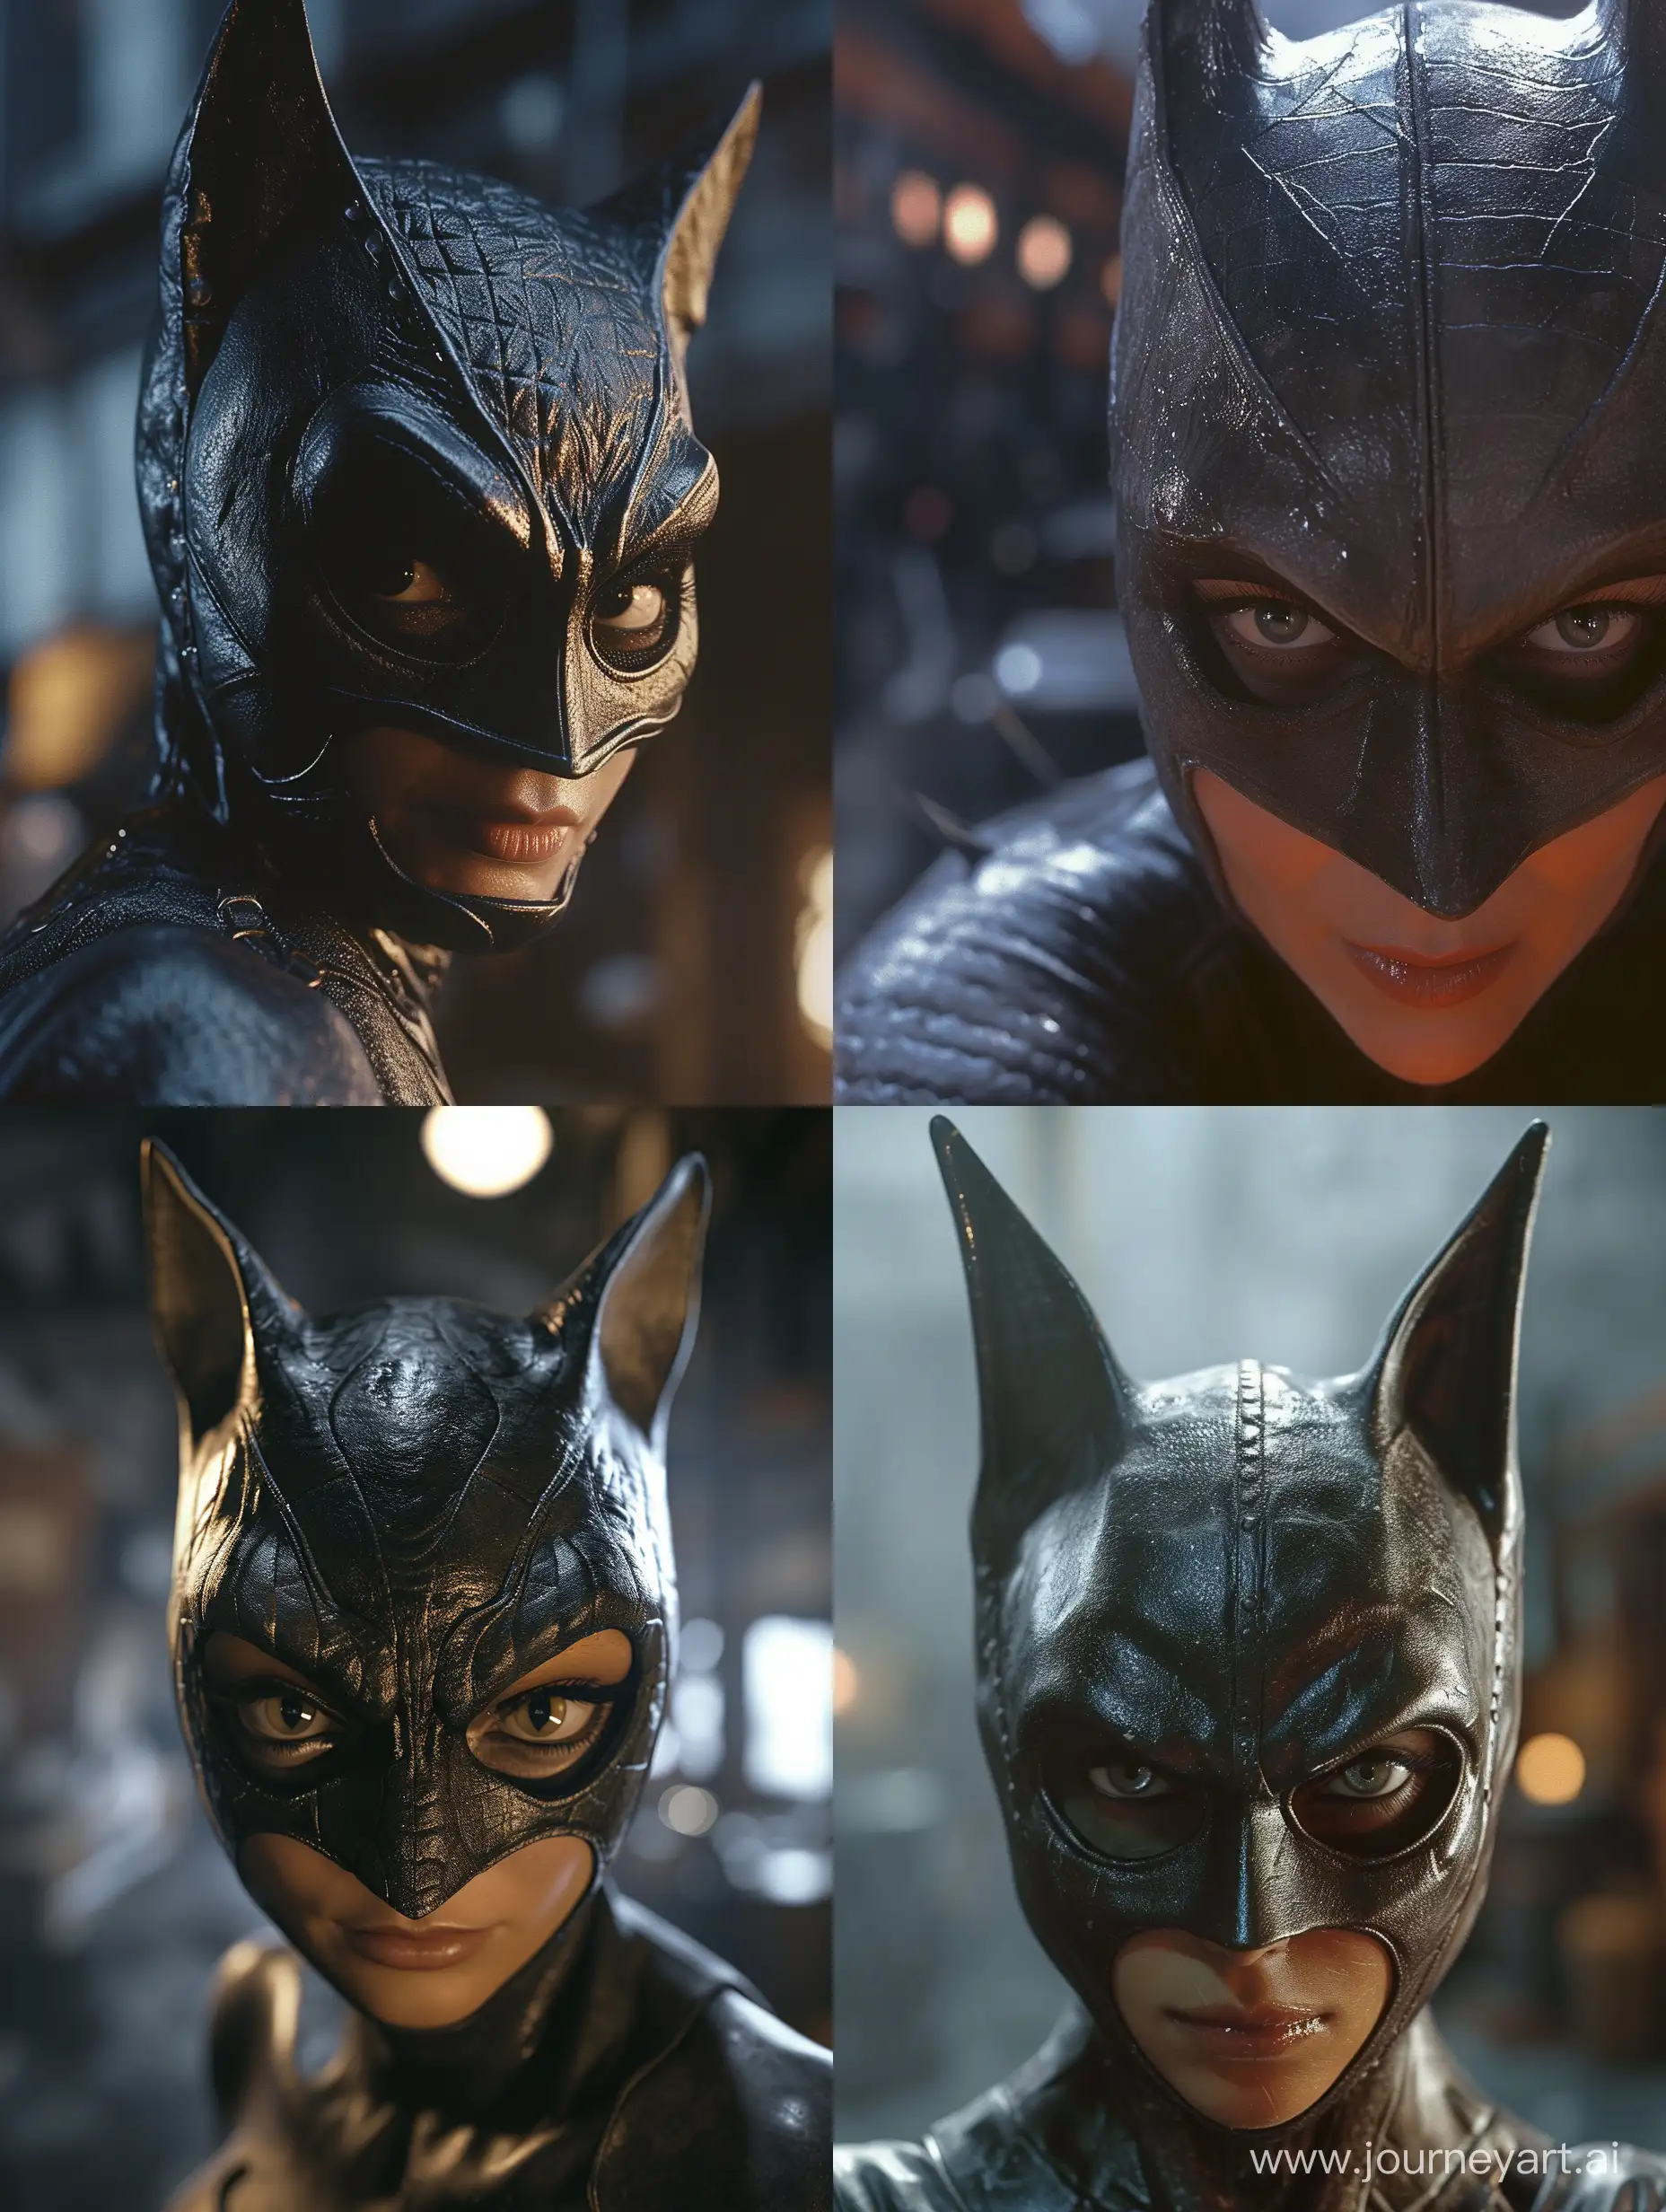 Intense-Catwoman-1989-Costume-CloseUp-in-Dimly-Lit-Gotham-Setting